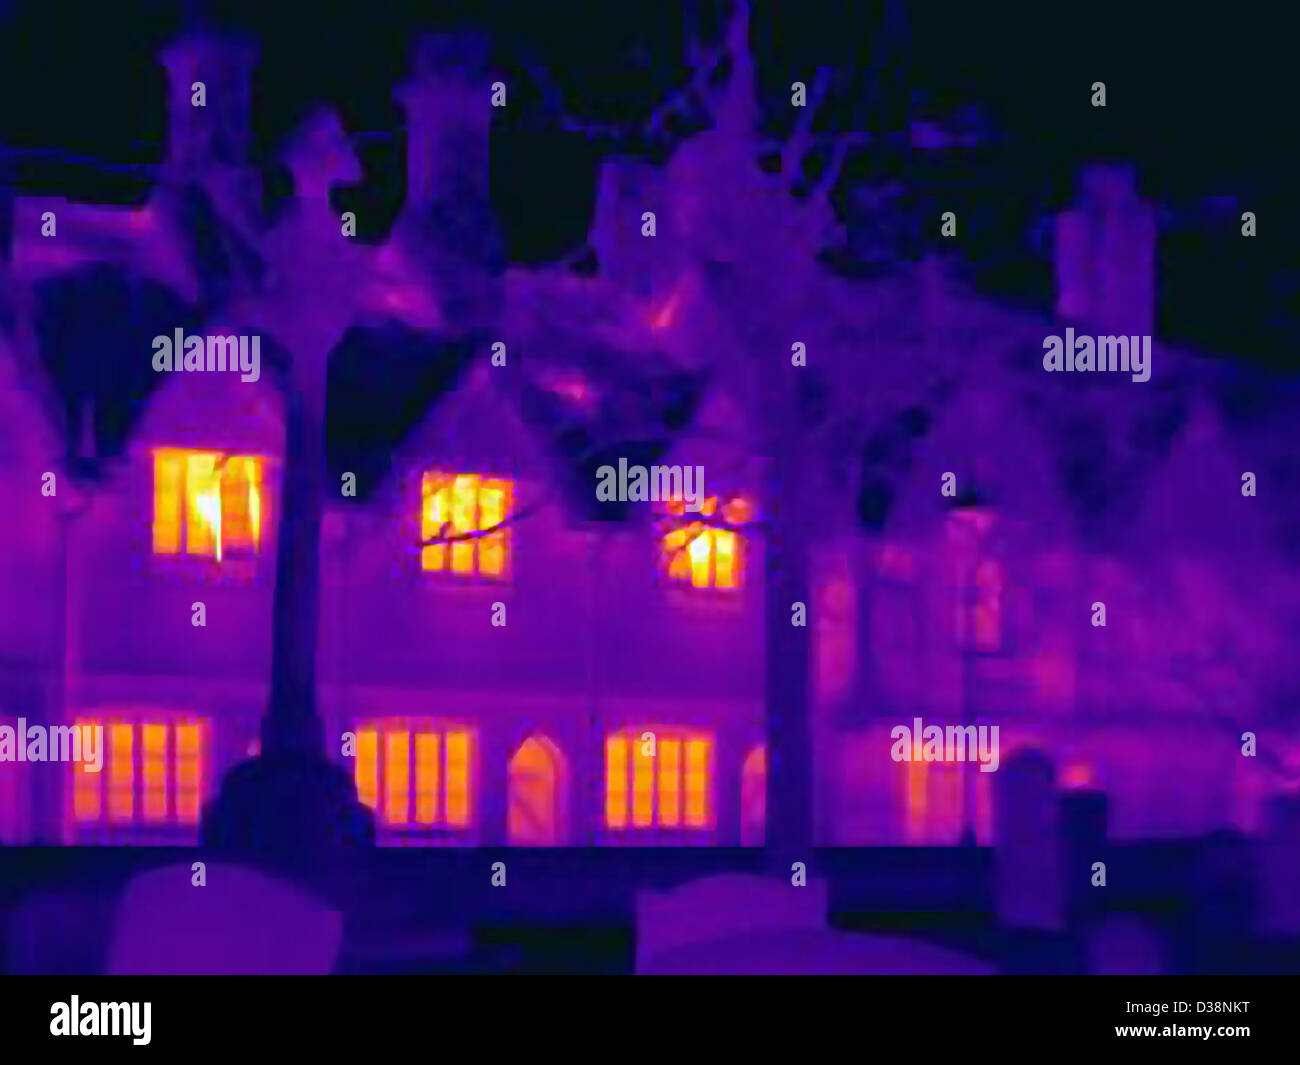 Immagine termica di case sulla strada di città Foto Stock